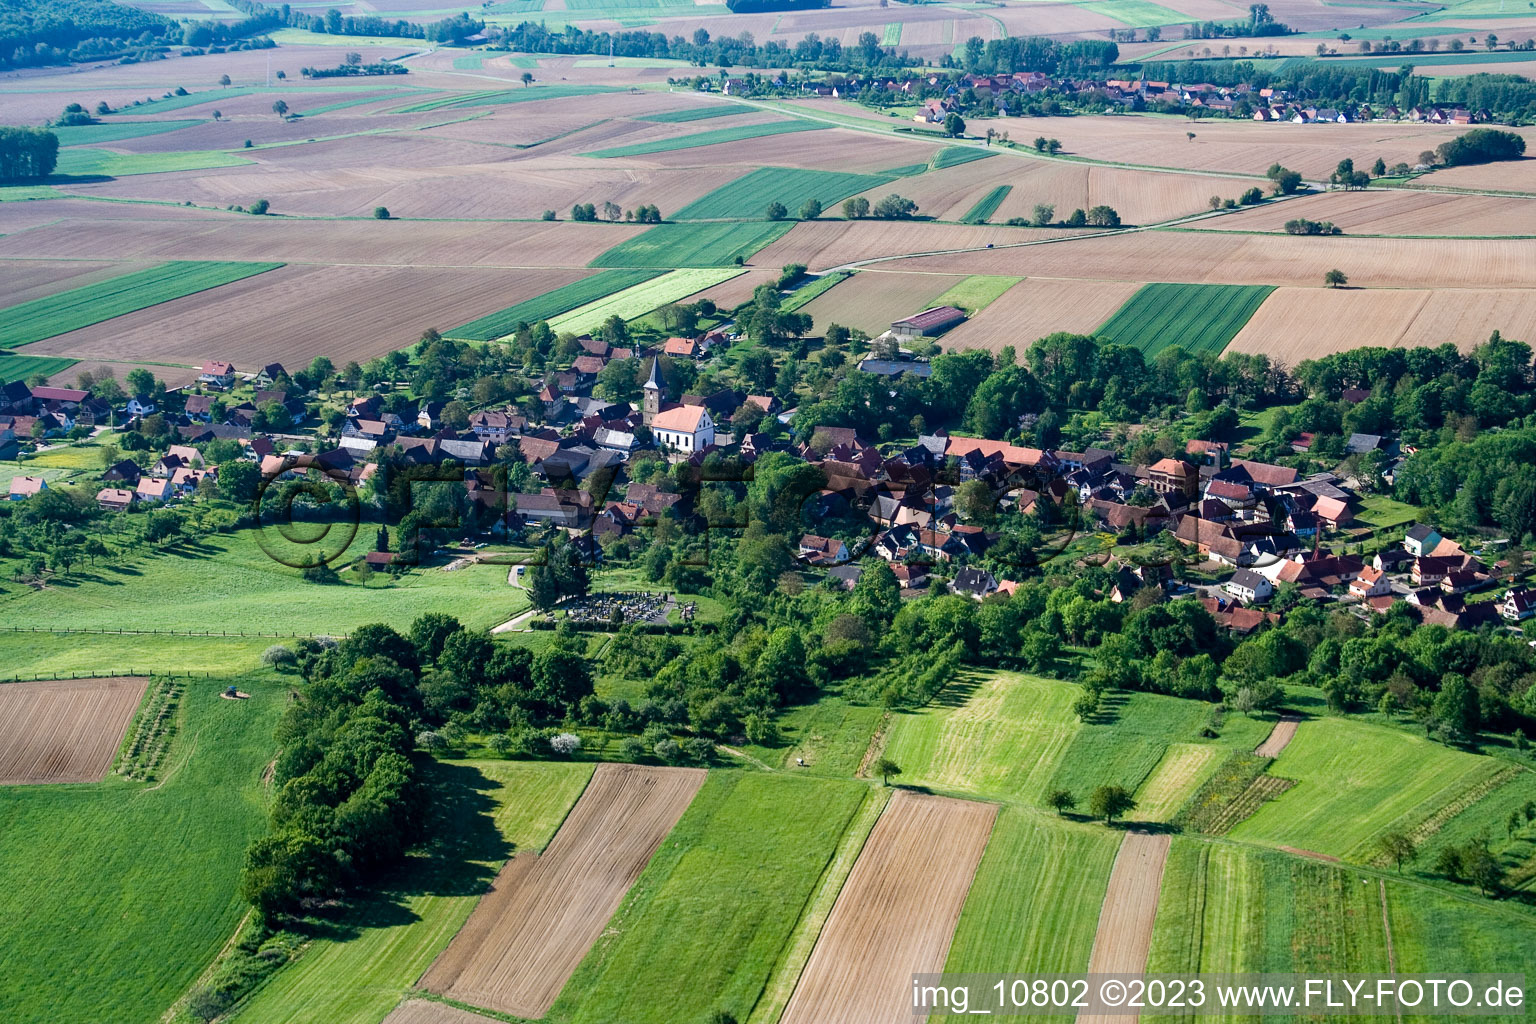 Drachenbronn-Birlenbach dans le département Bas Rhin, France vu d'un drone